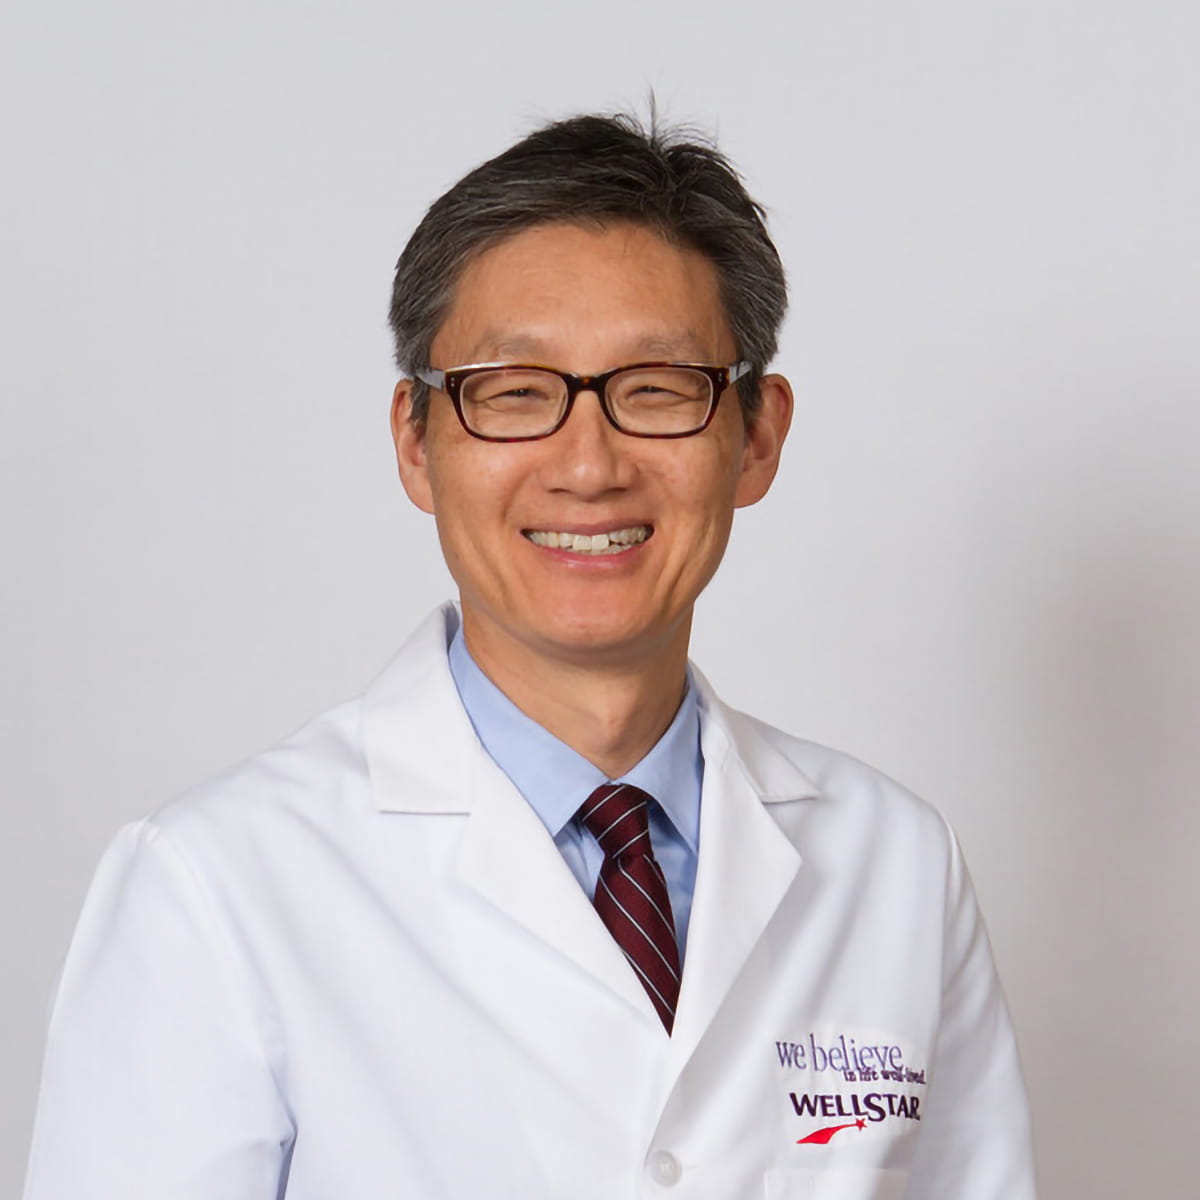 A friendly headshot of Thomas Chun, MD